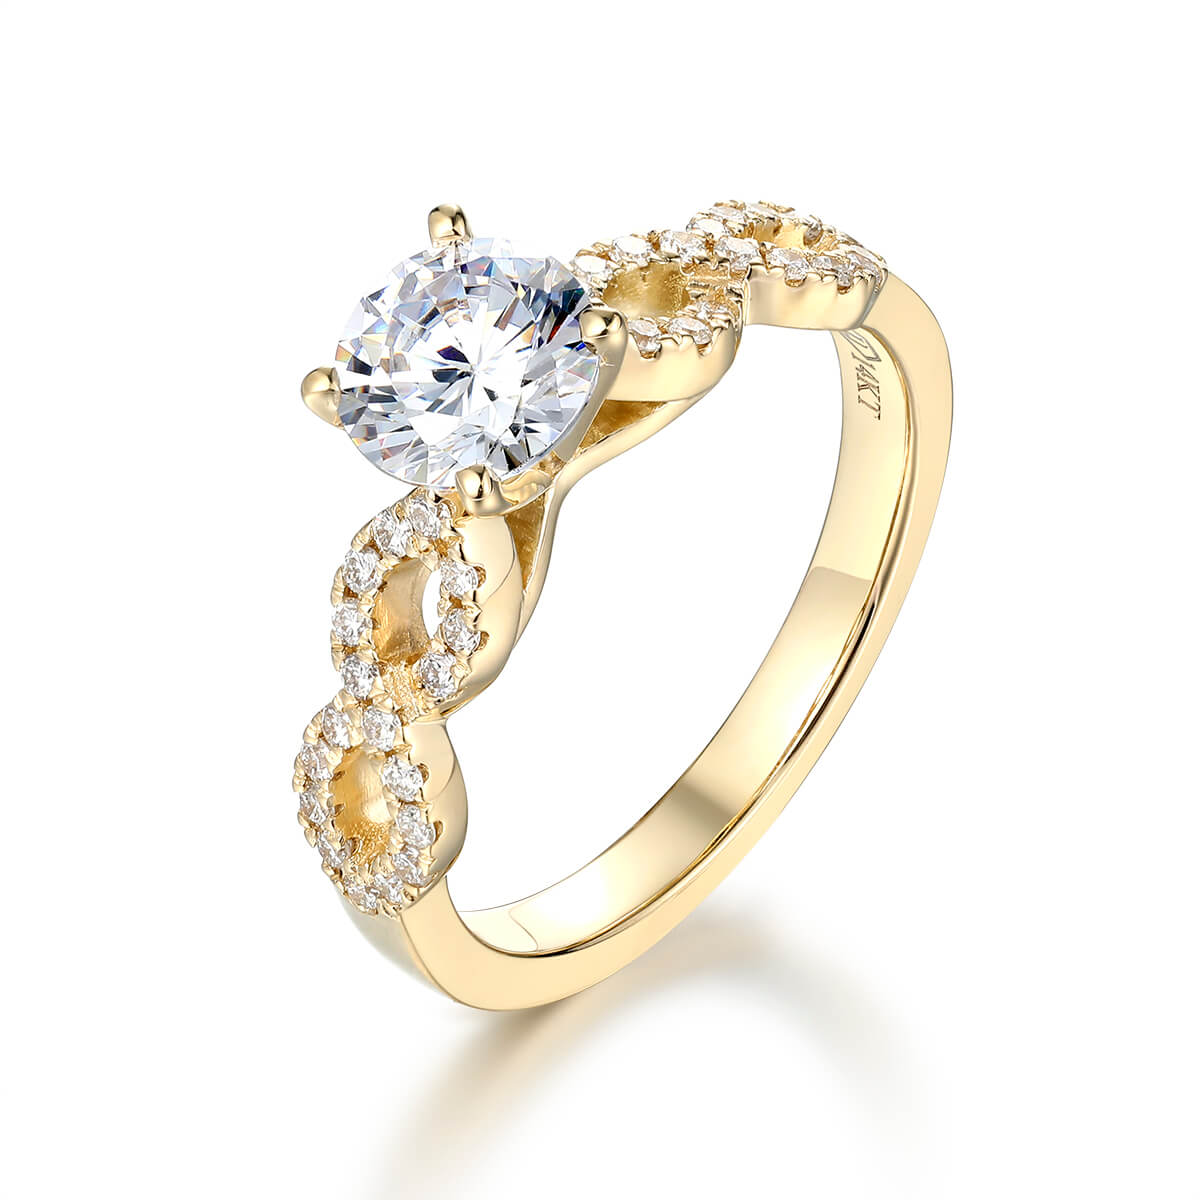 Supplier Spotlight: Infinity Diamond Jewellery Engagement Rings